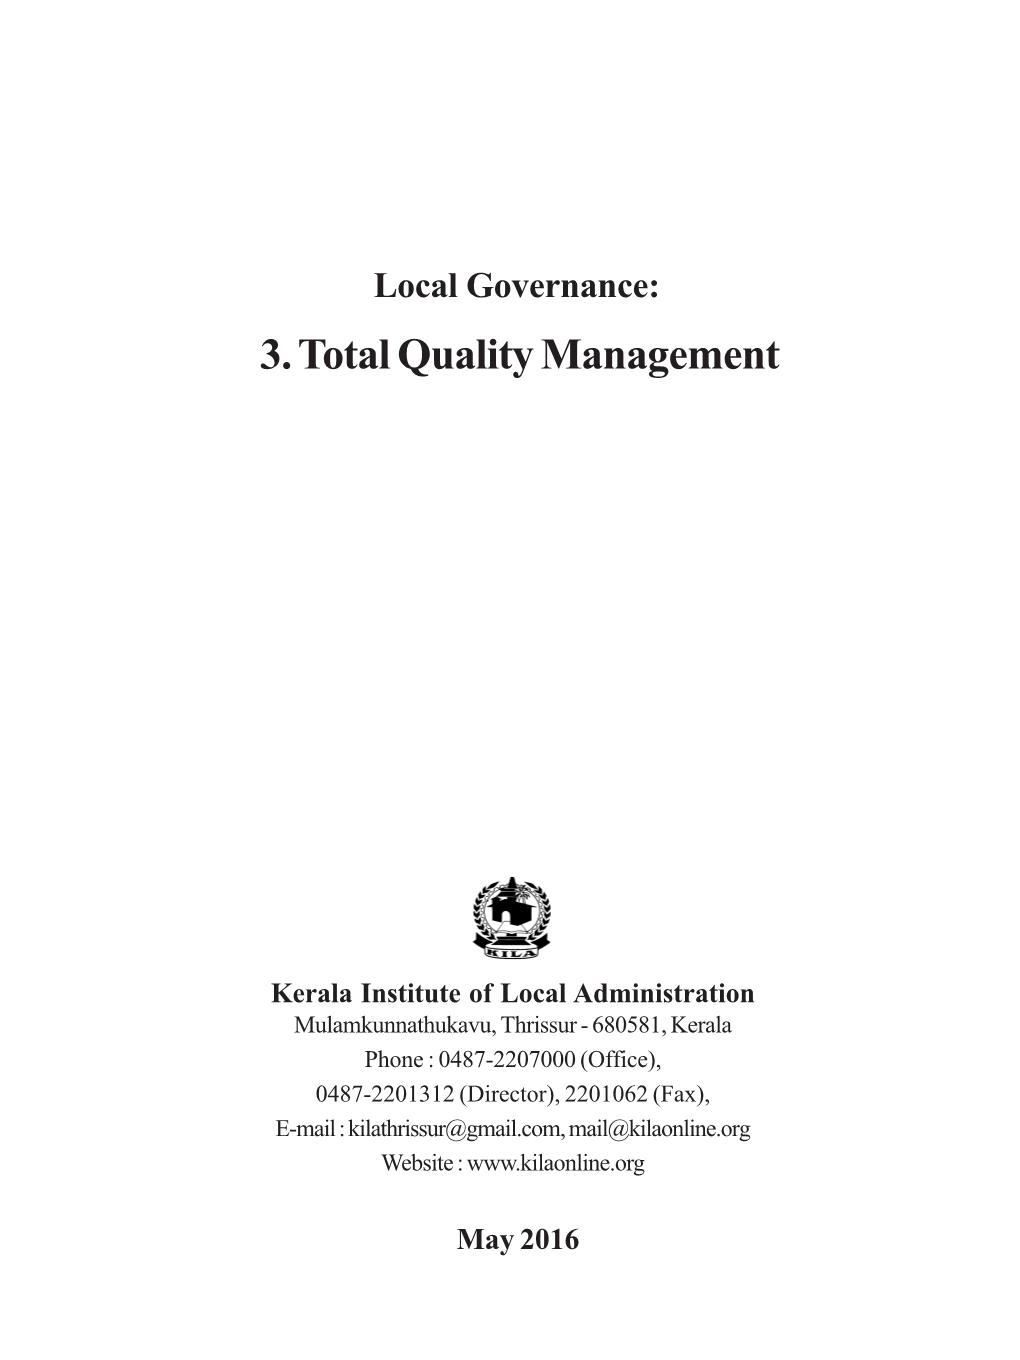 Local Governance: 3